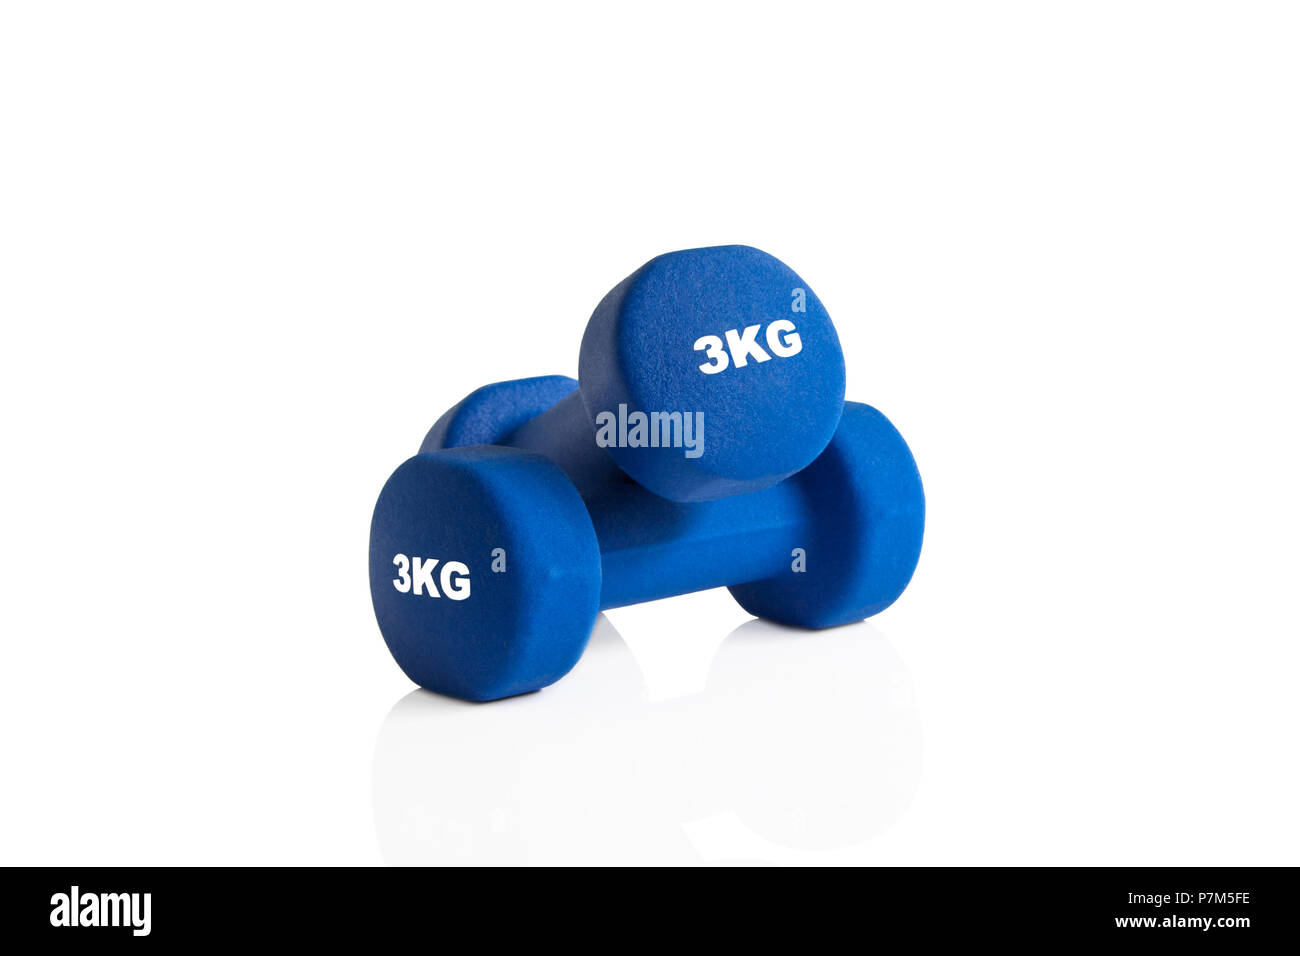 3kg blue gym dumbbells isolated on a white background. Stock Photo